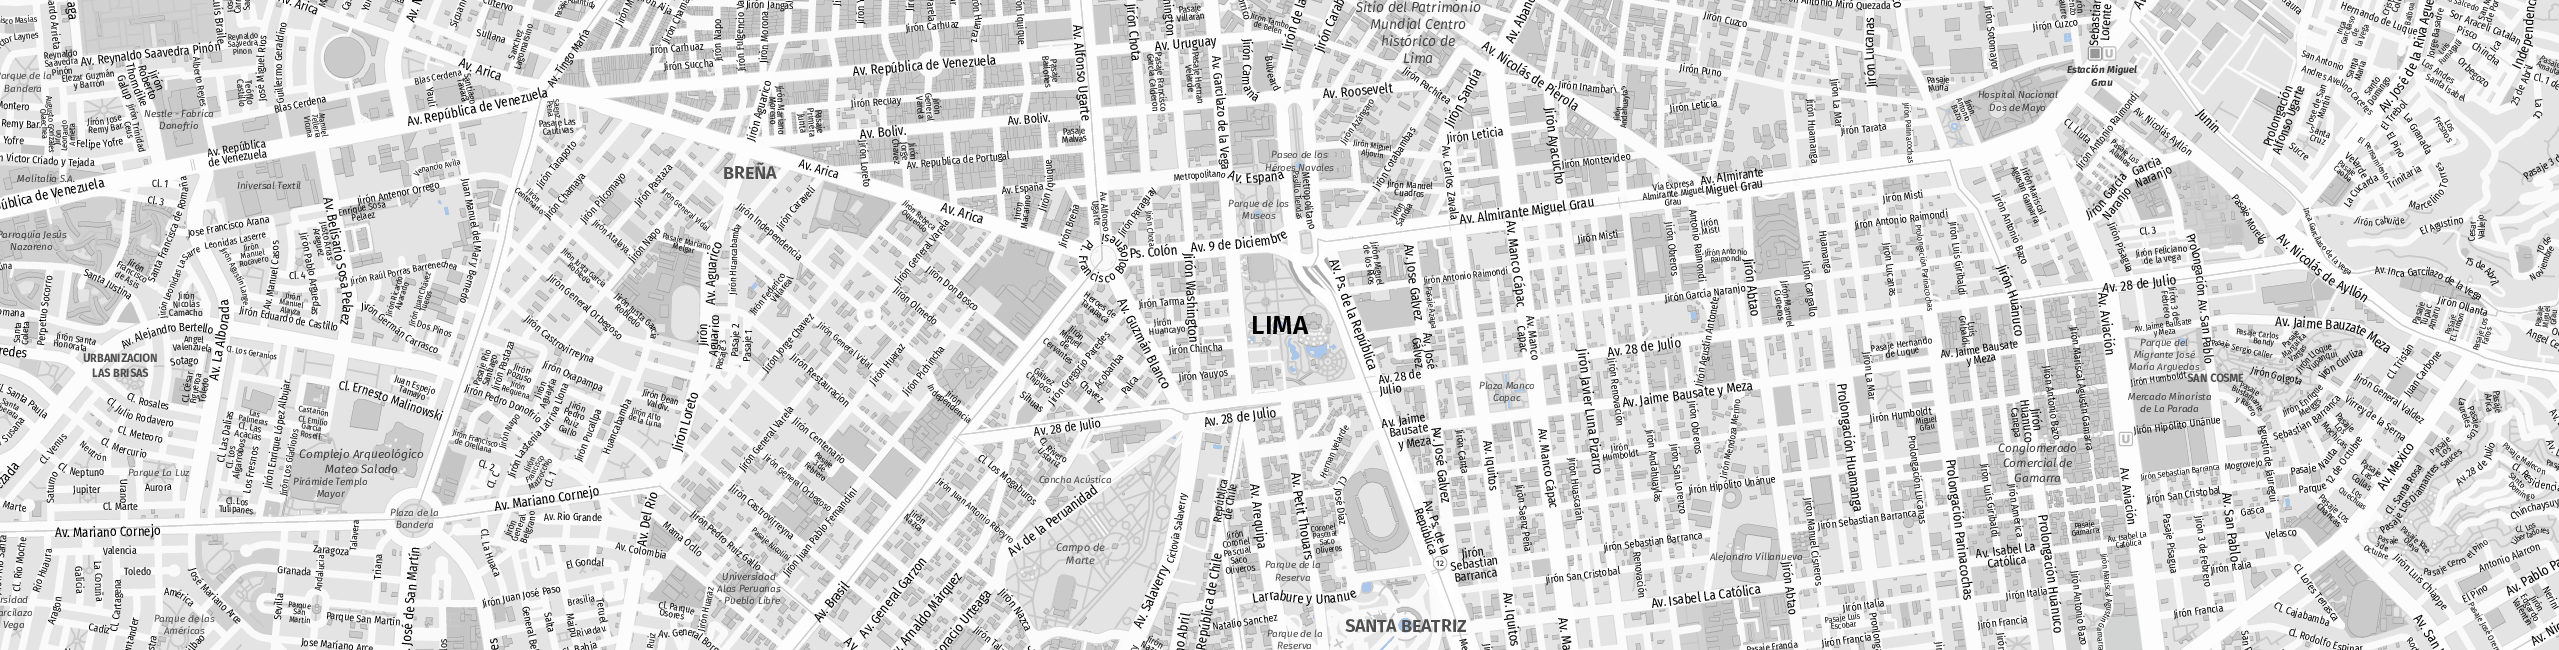 Stadtplan Lima zum Downloaden.